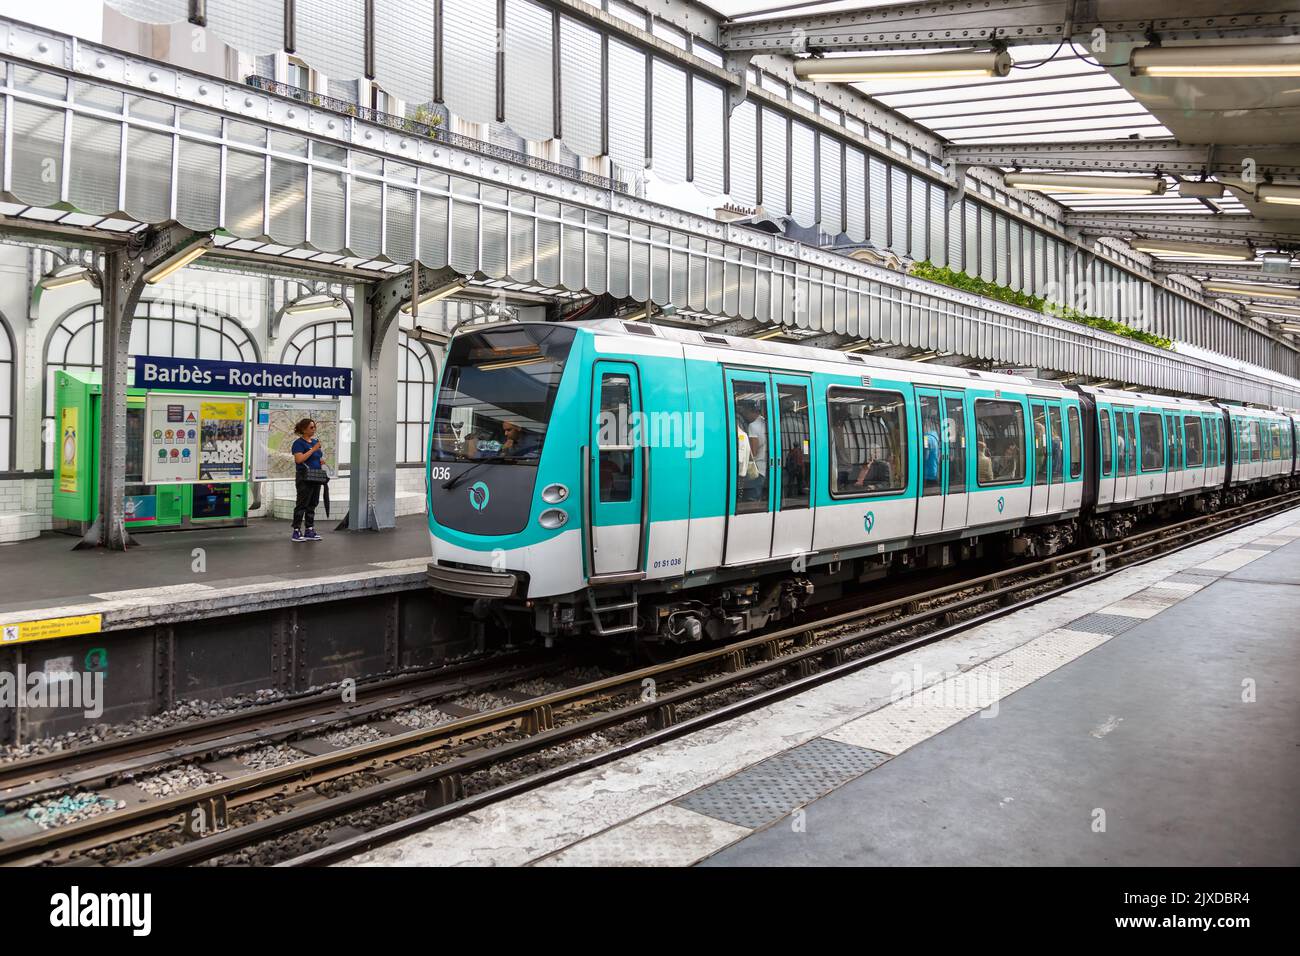 París, Francia - 5 de junio de 2022: Estación de metro de París Barbès-Rochechouart de transporte público en París, Francia. Foto de stock